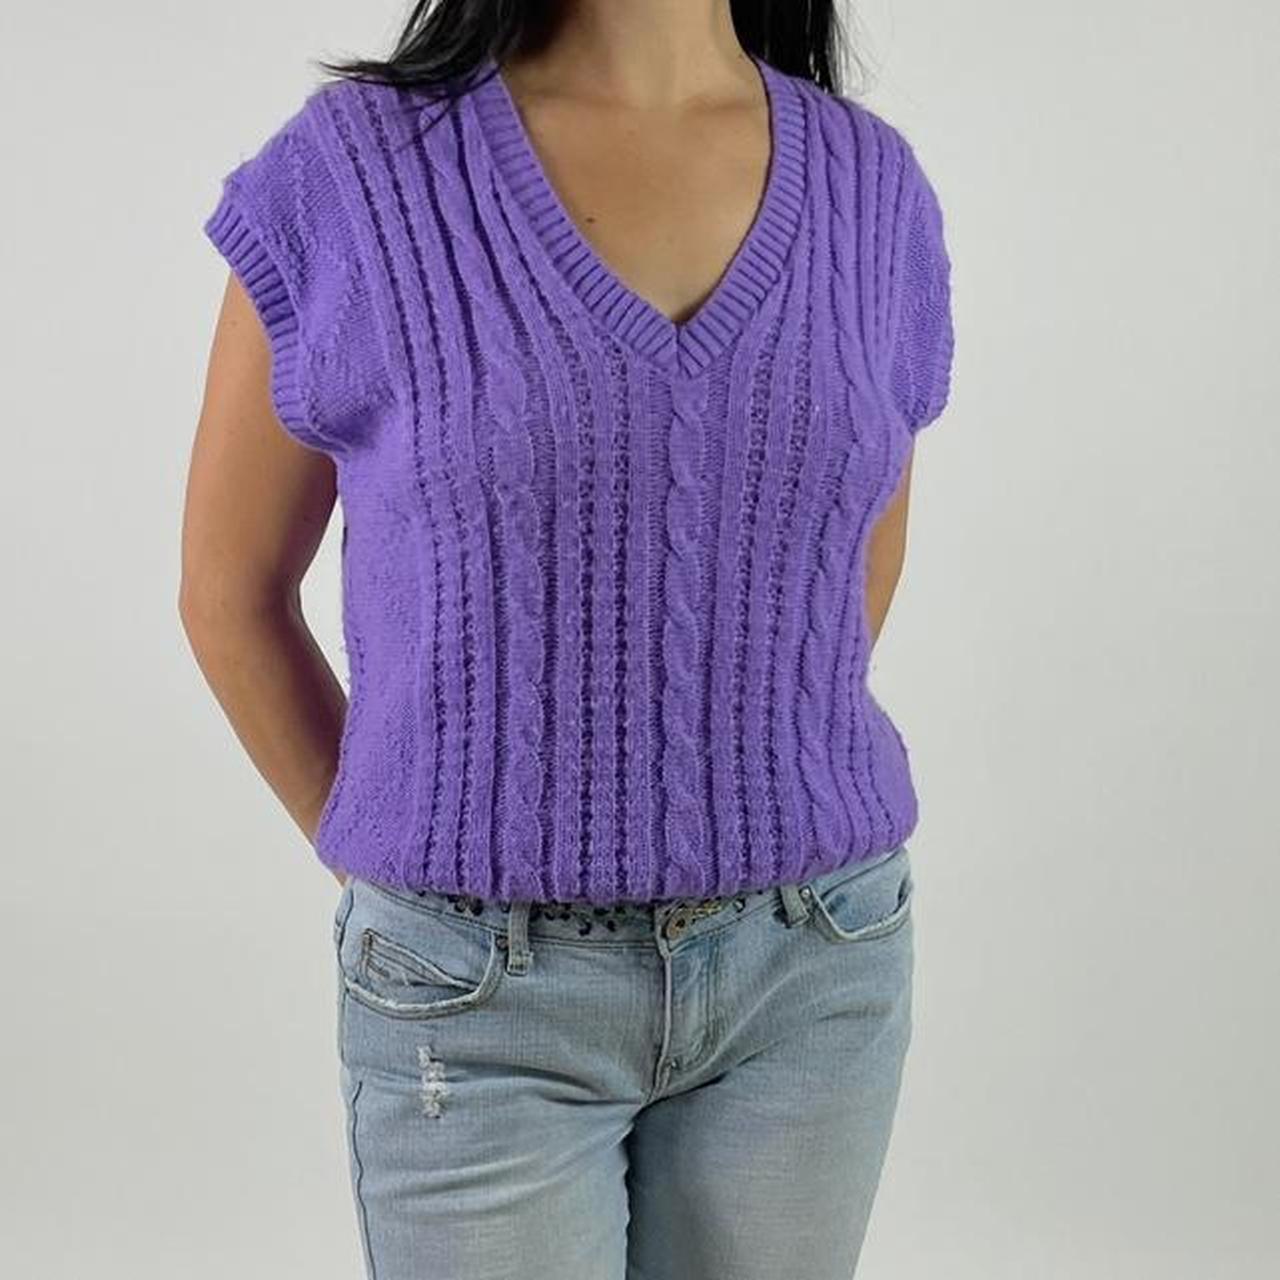 Product Image 1 - Vintage Purple Sweater Vest
Sleeveless sweater